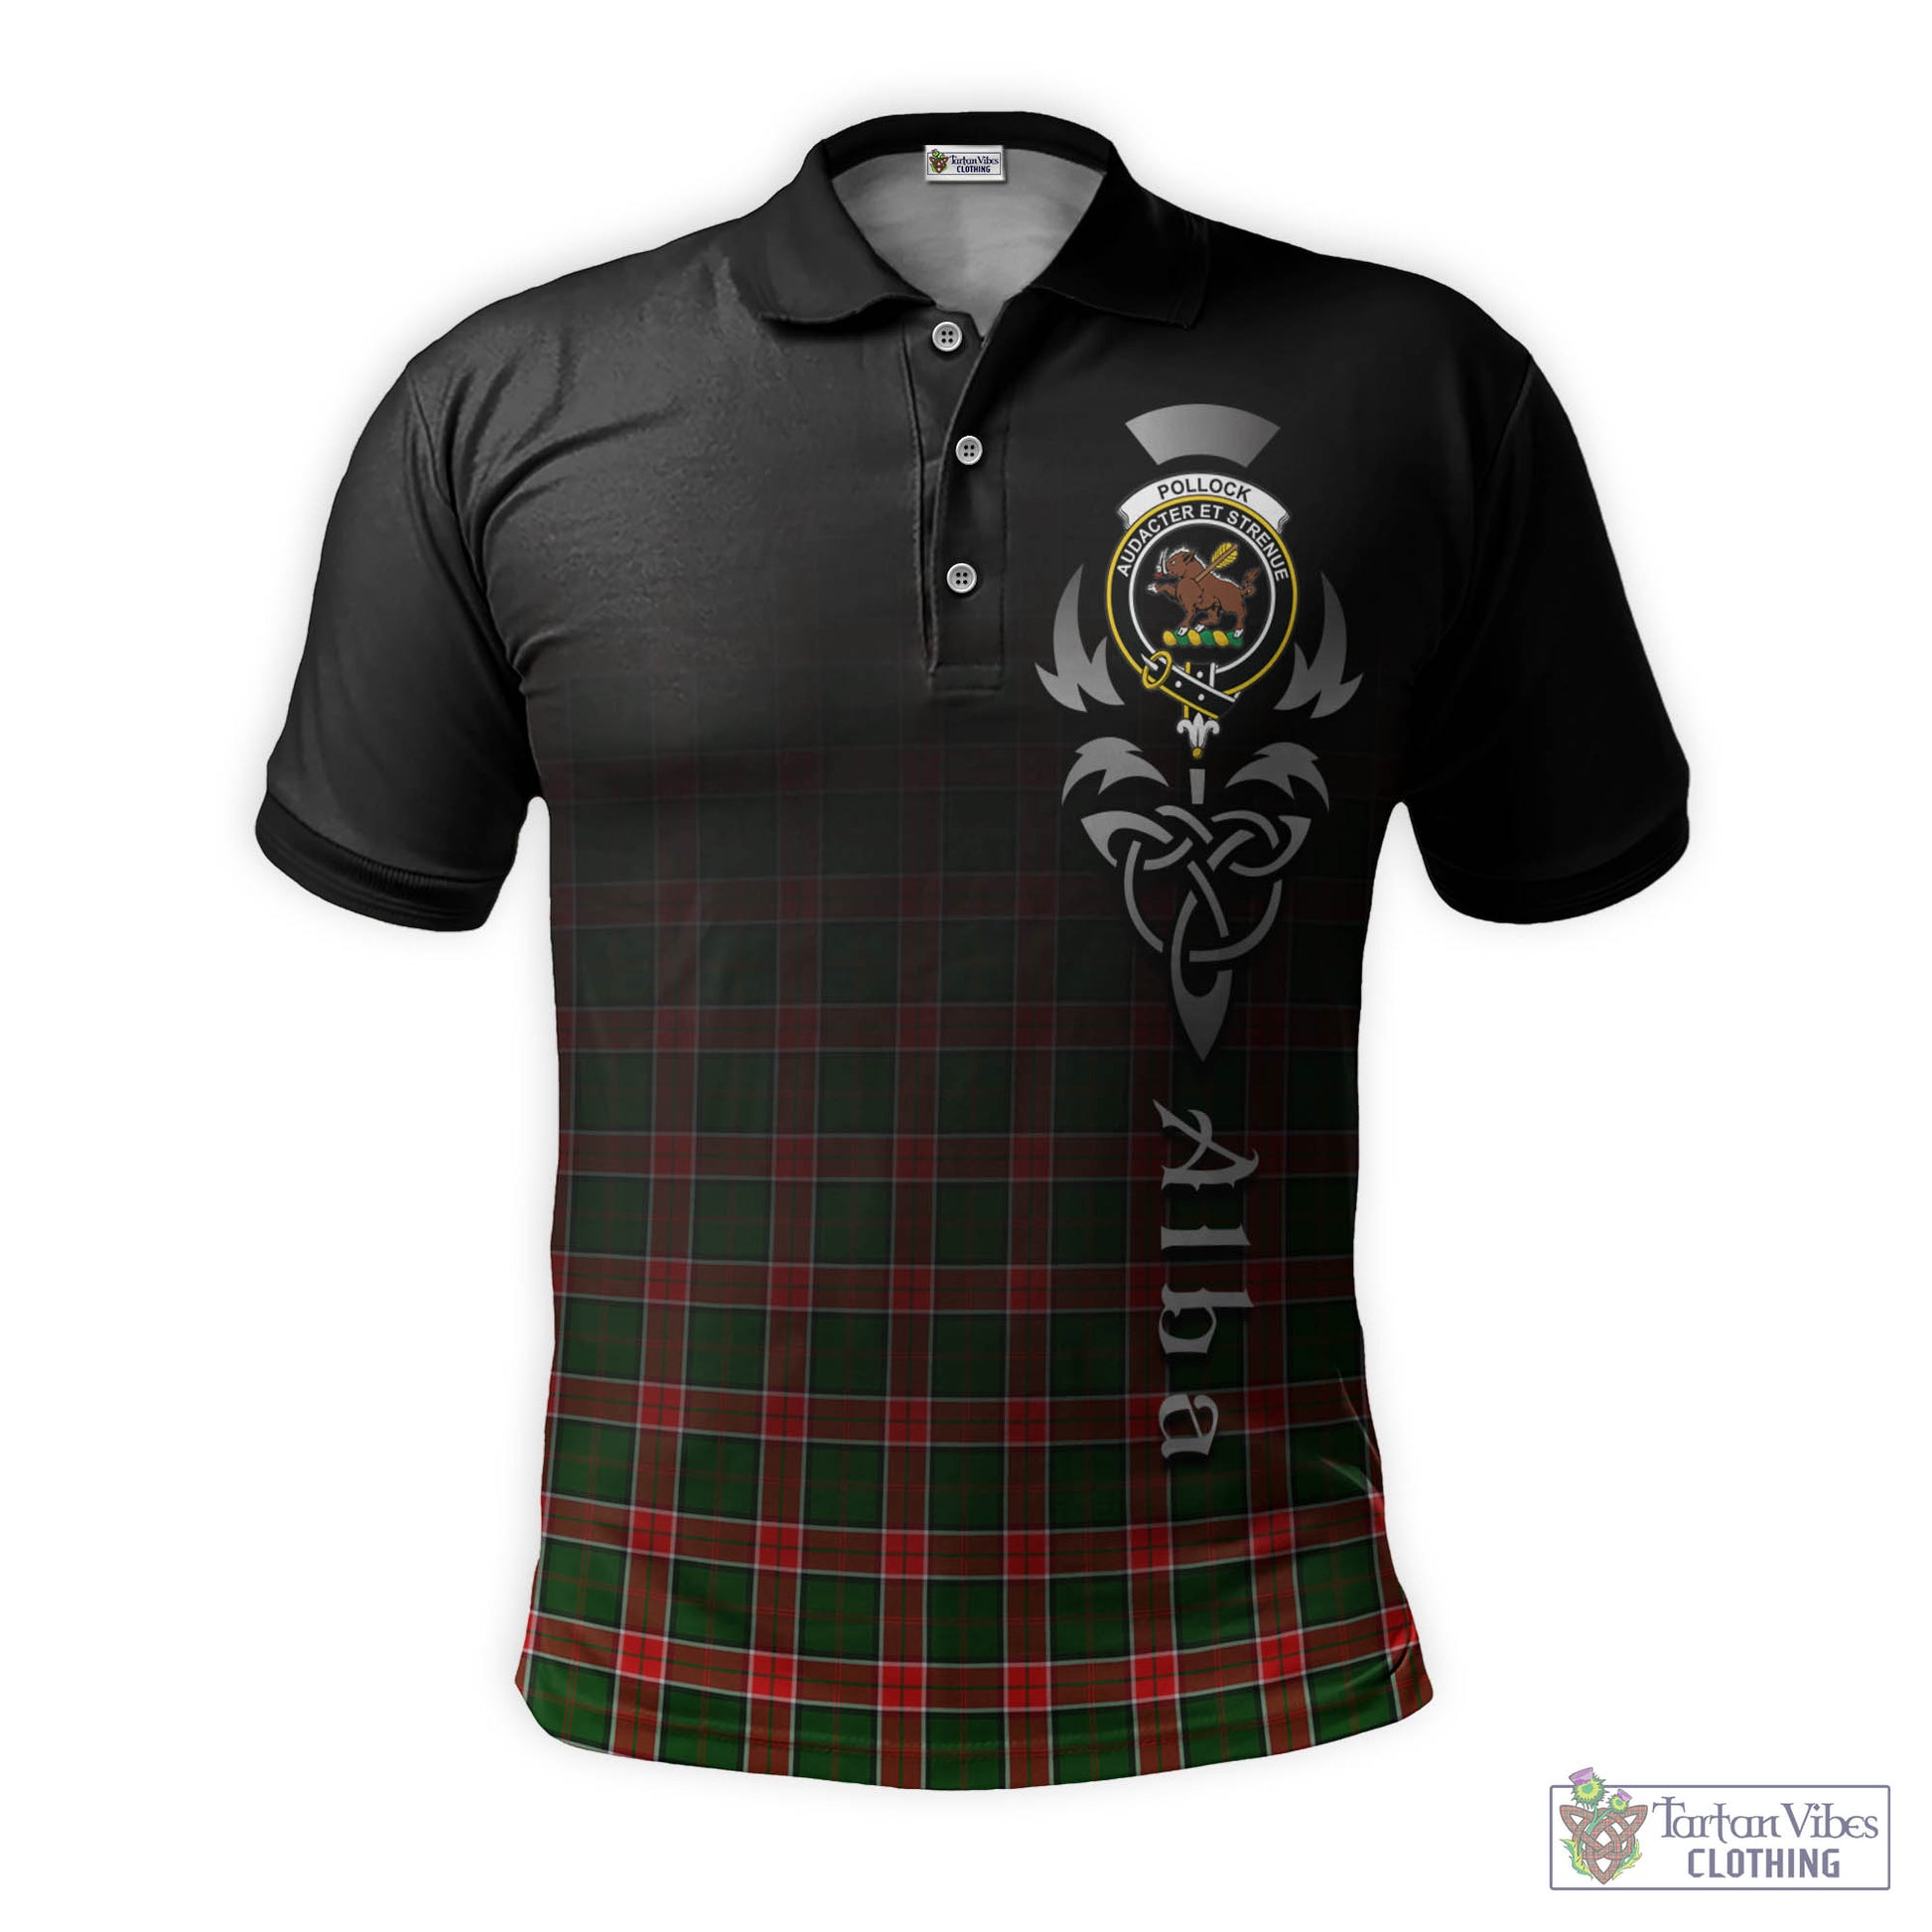 Tartan Vibes Clothing Pollock Modern Tartan Polo Shirt Featuring Alba Gu Brath Family Crest Celtic Inspired